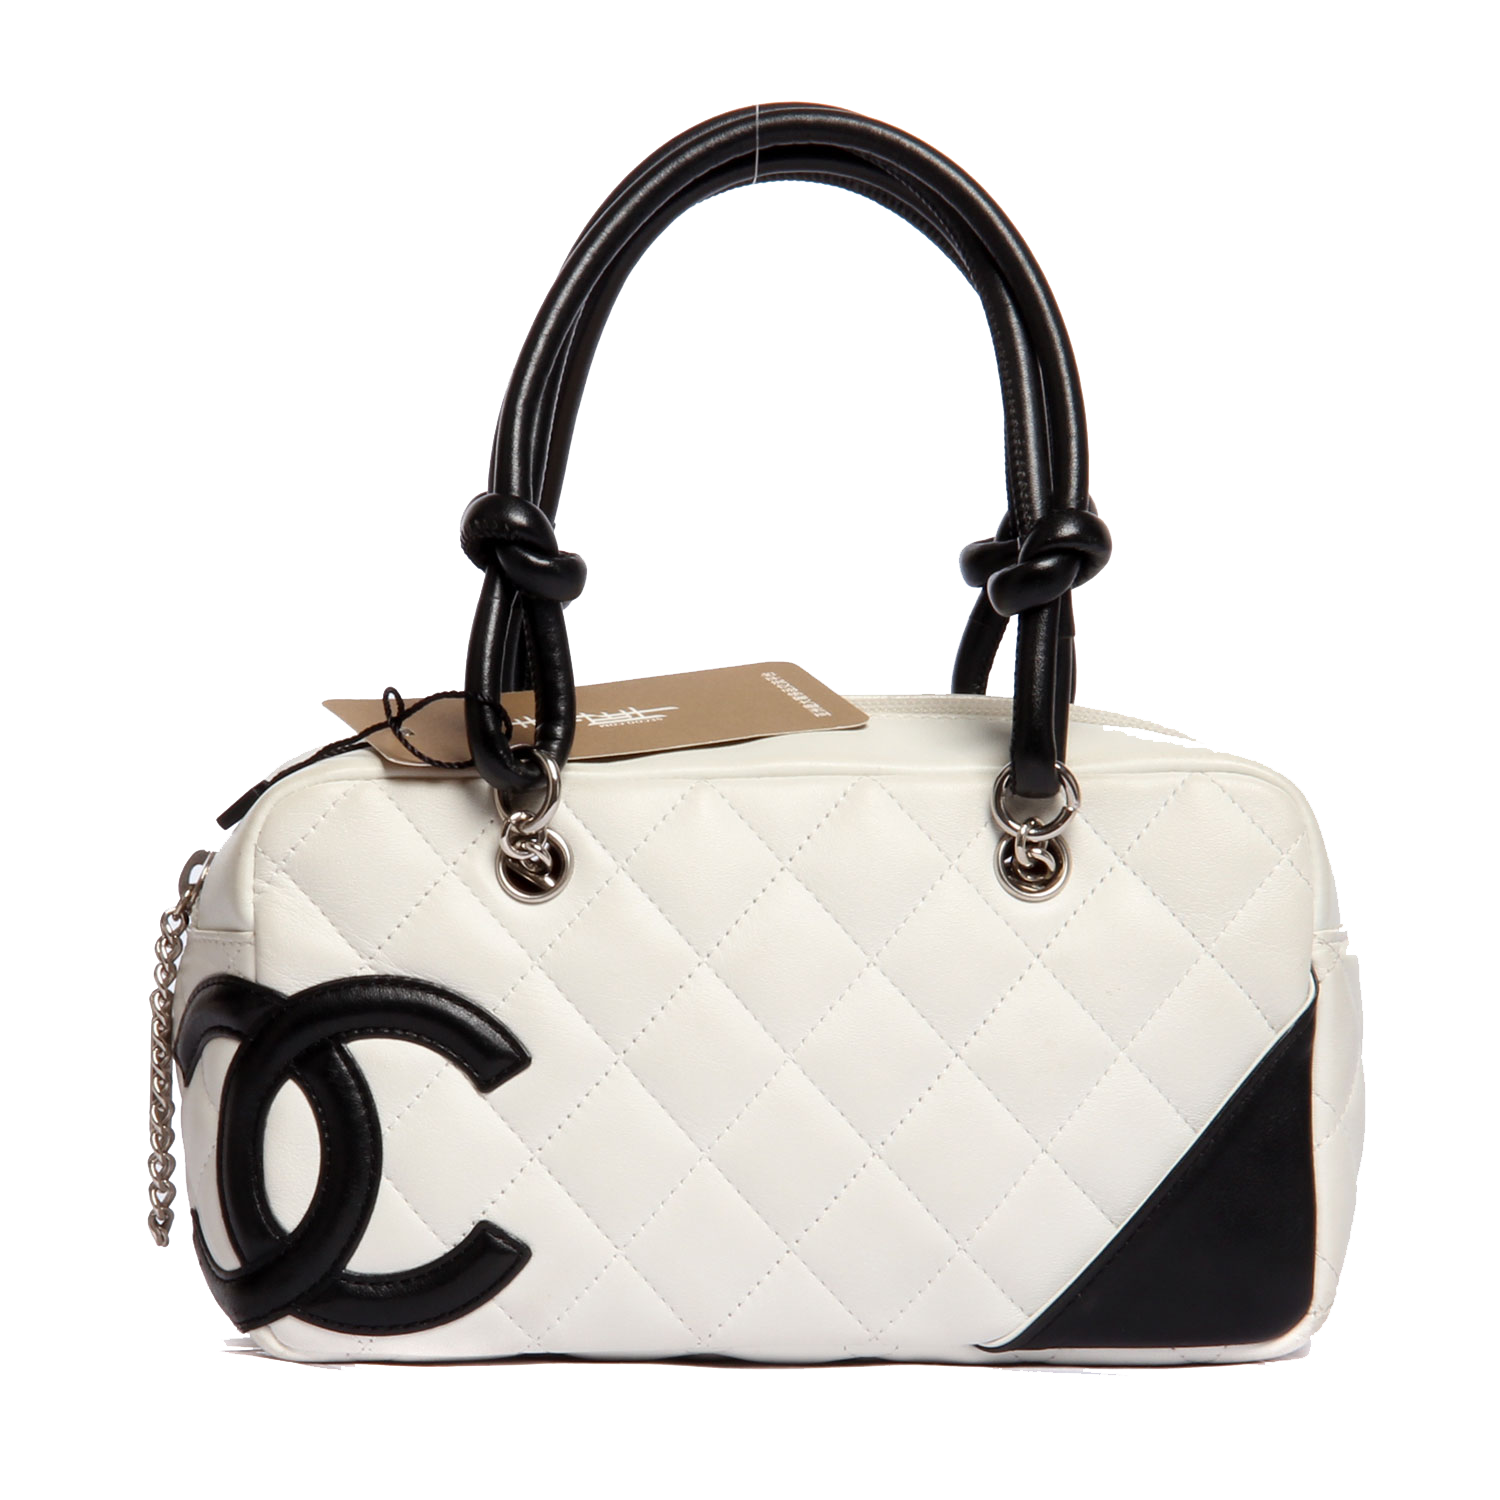 Shop Beautxc9 Maes Handbag Chanel Free Download Image PNG Image